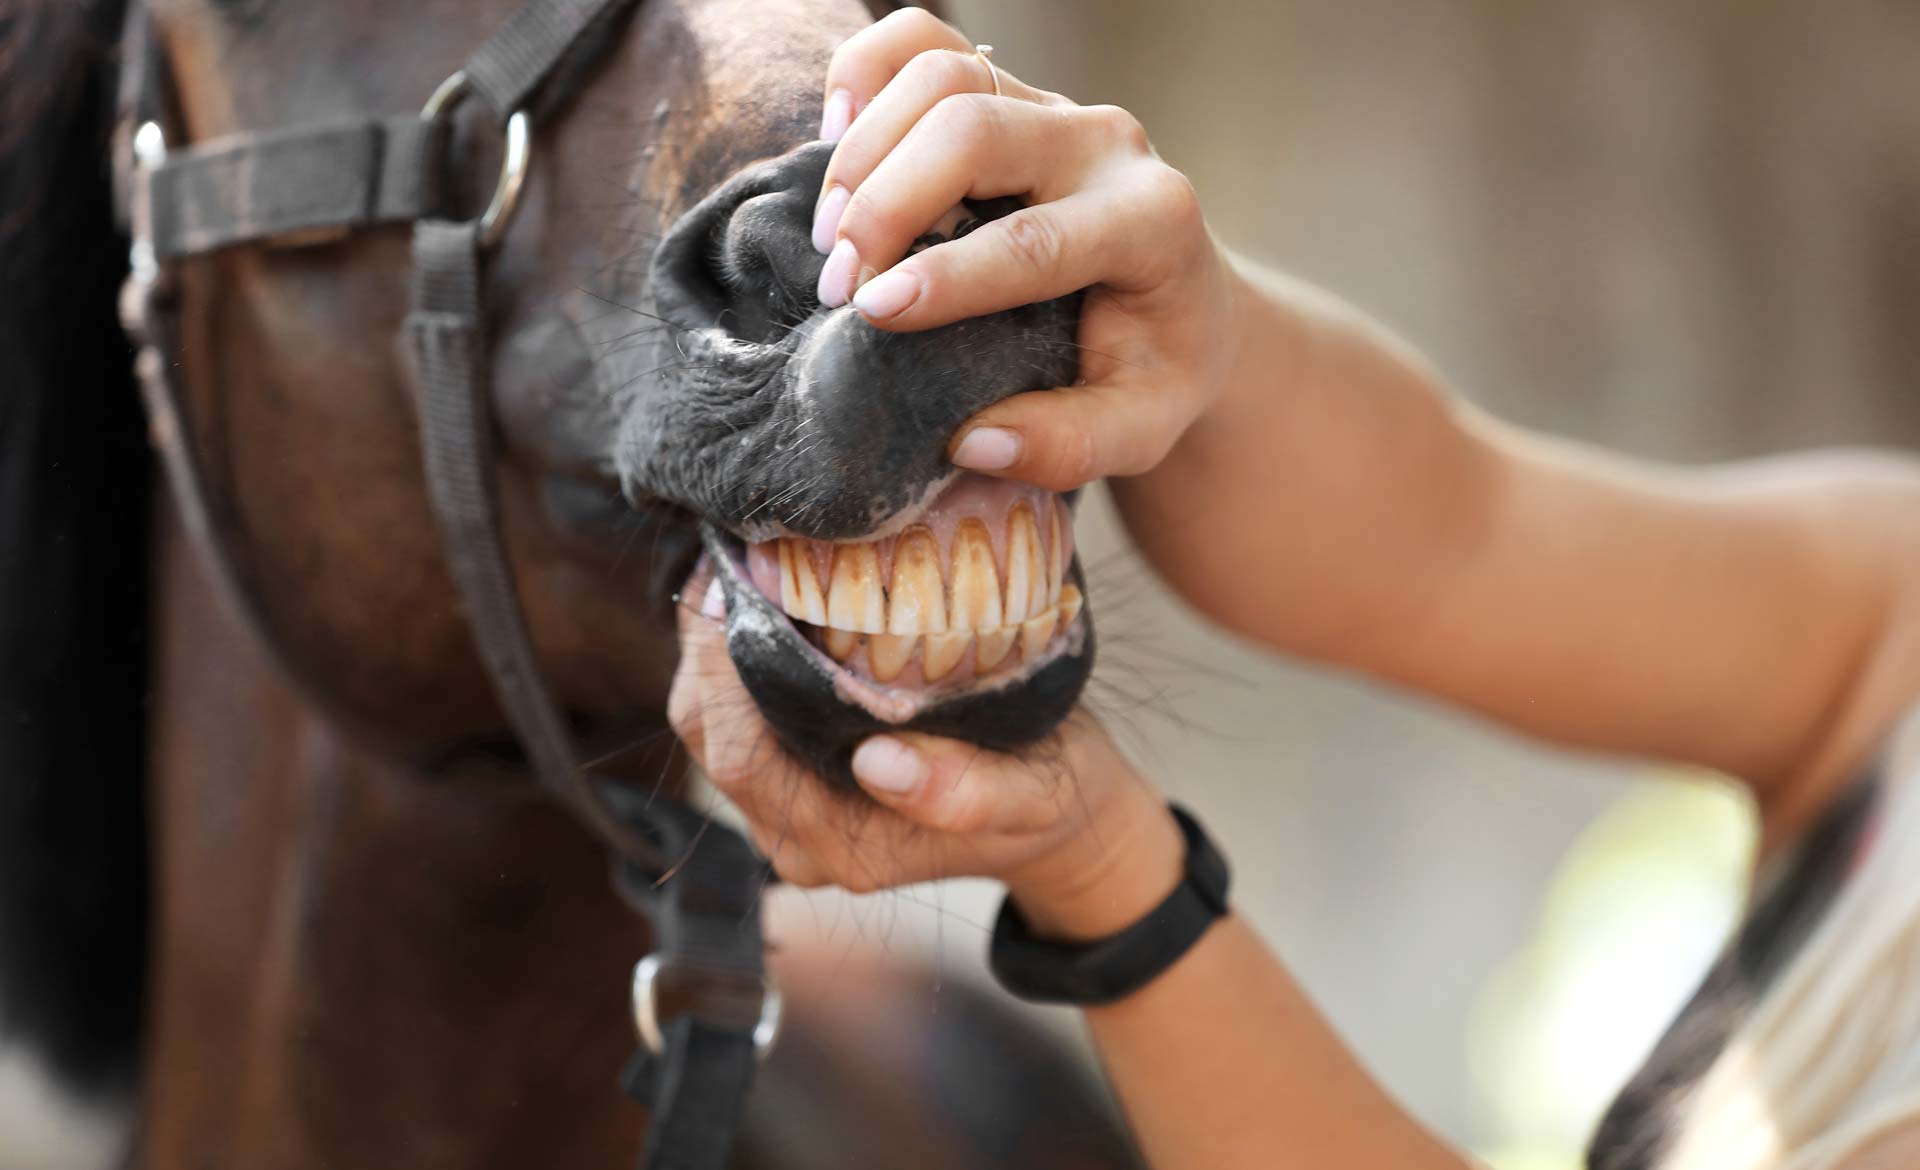 eotrh-dental-disease-in-horses-common-causes-symptoms-treatment-banner